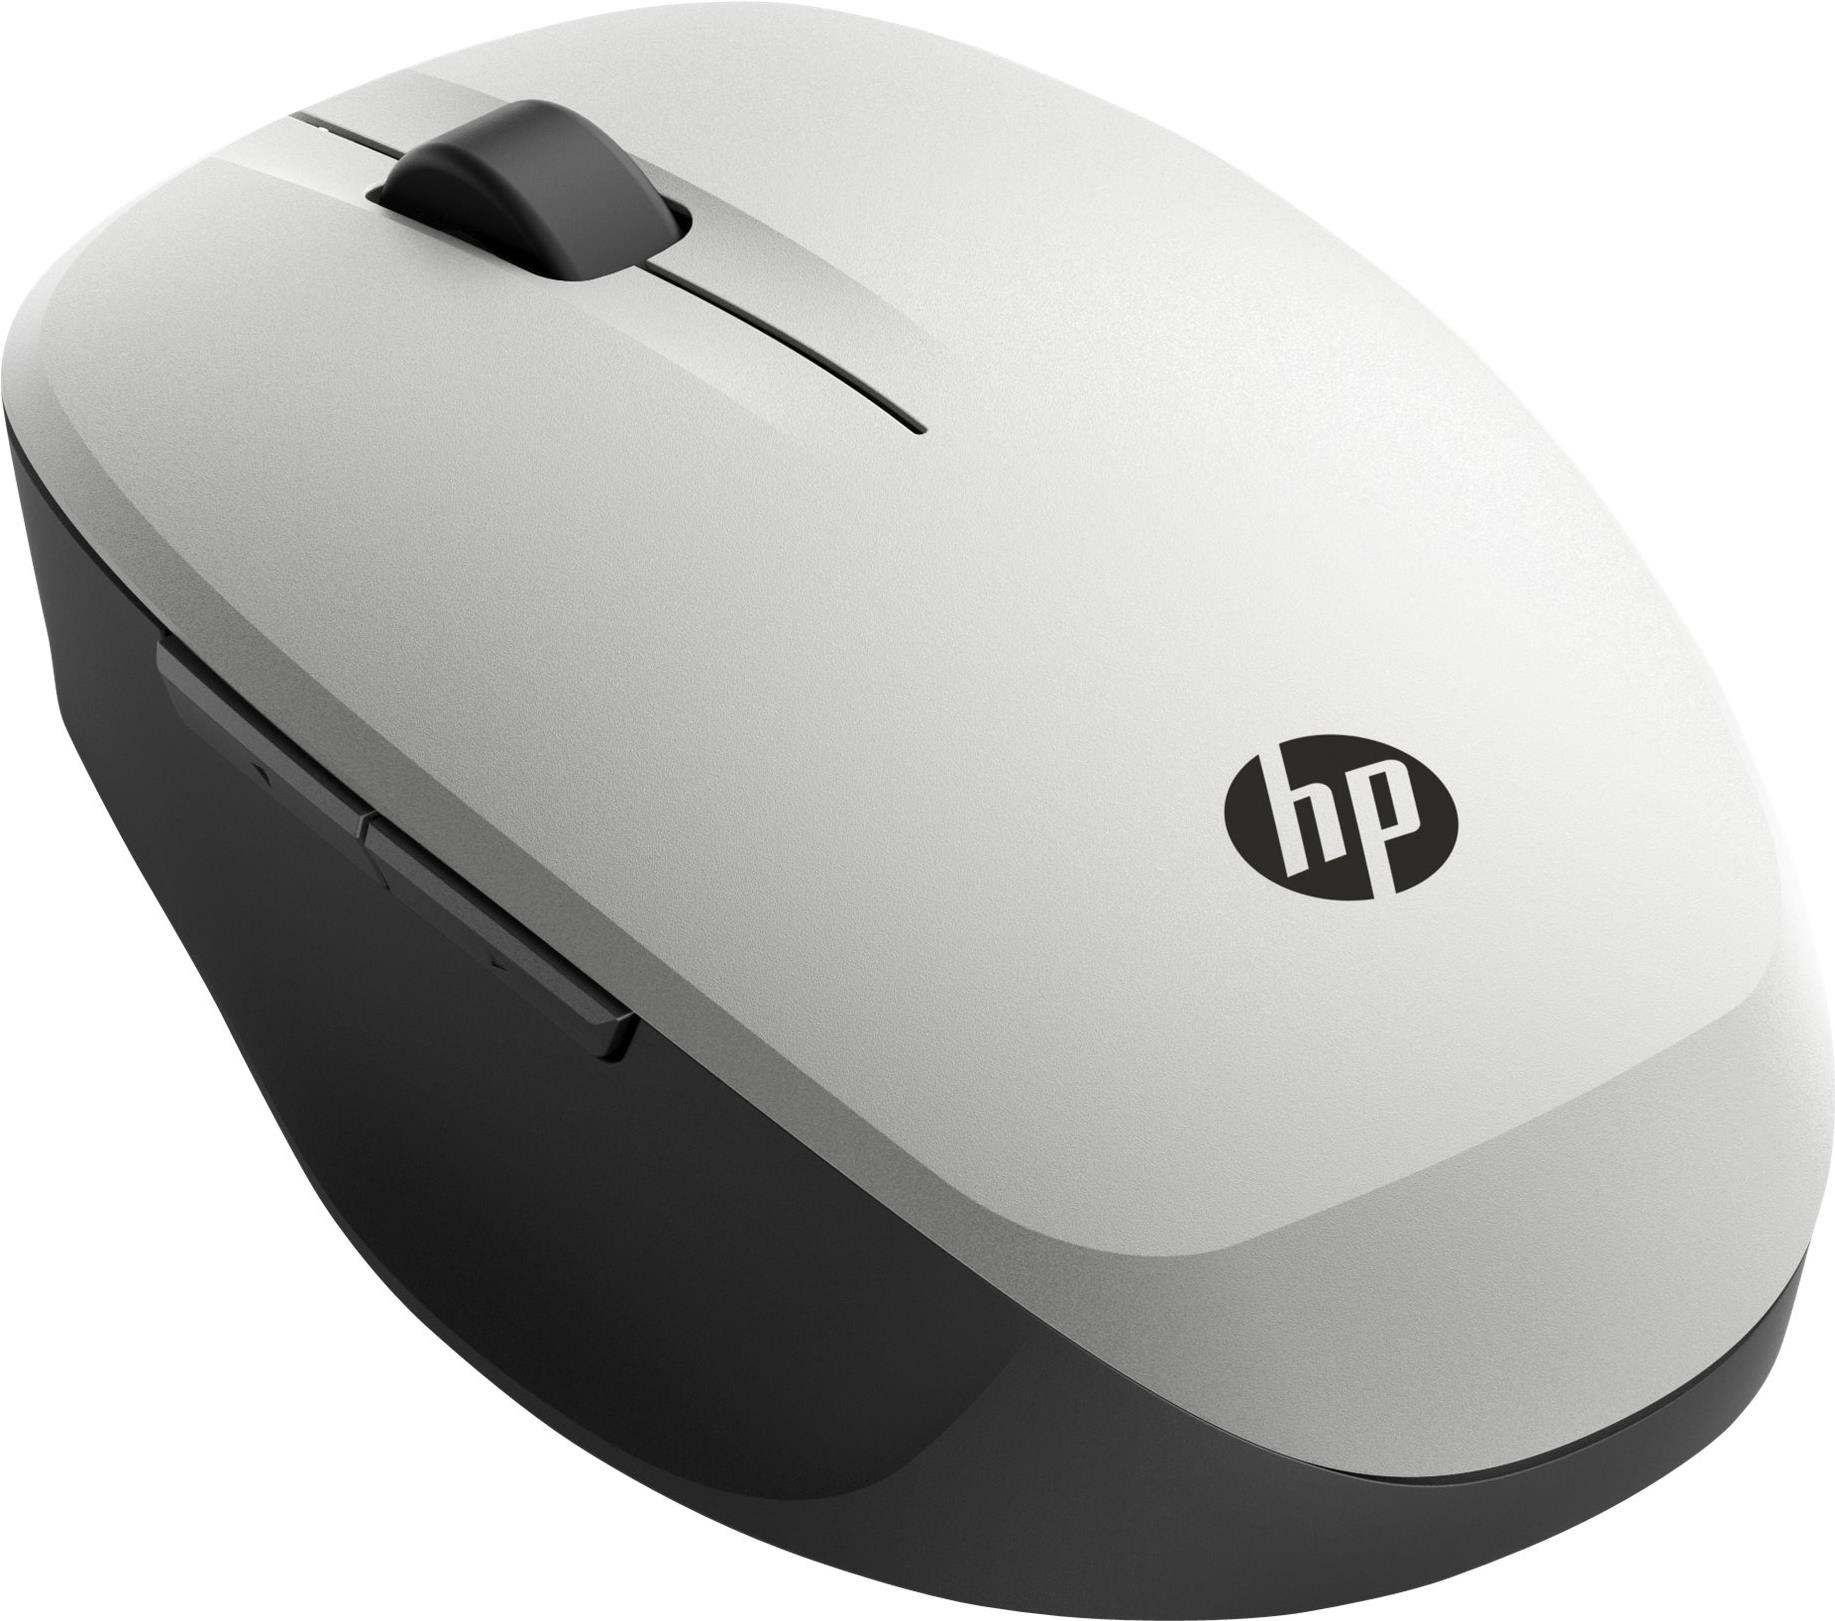 HP Dual Mode Silver Mouse 300 Euro (P) (6CR72AA#ABB)